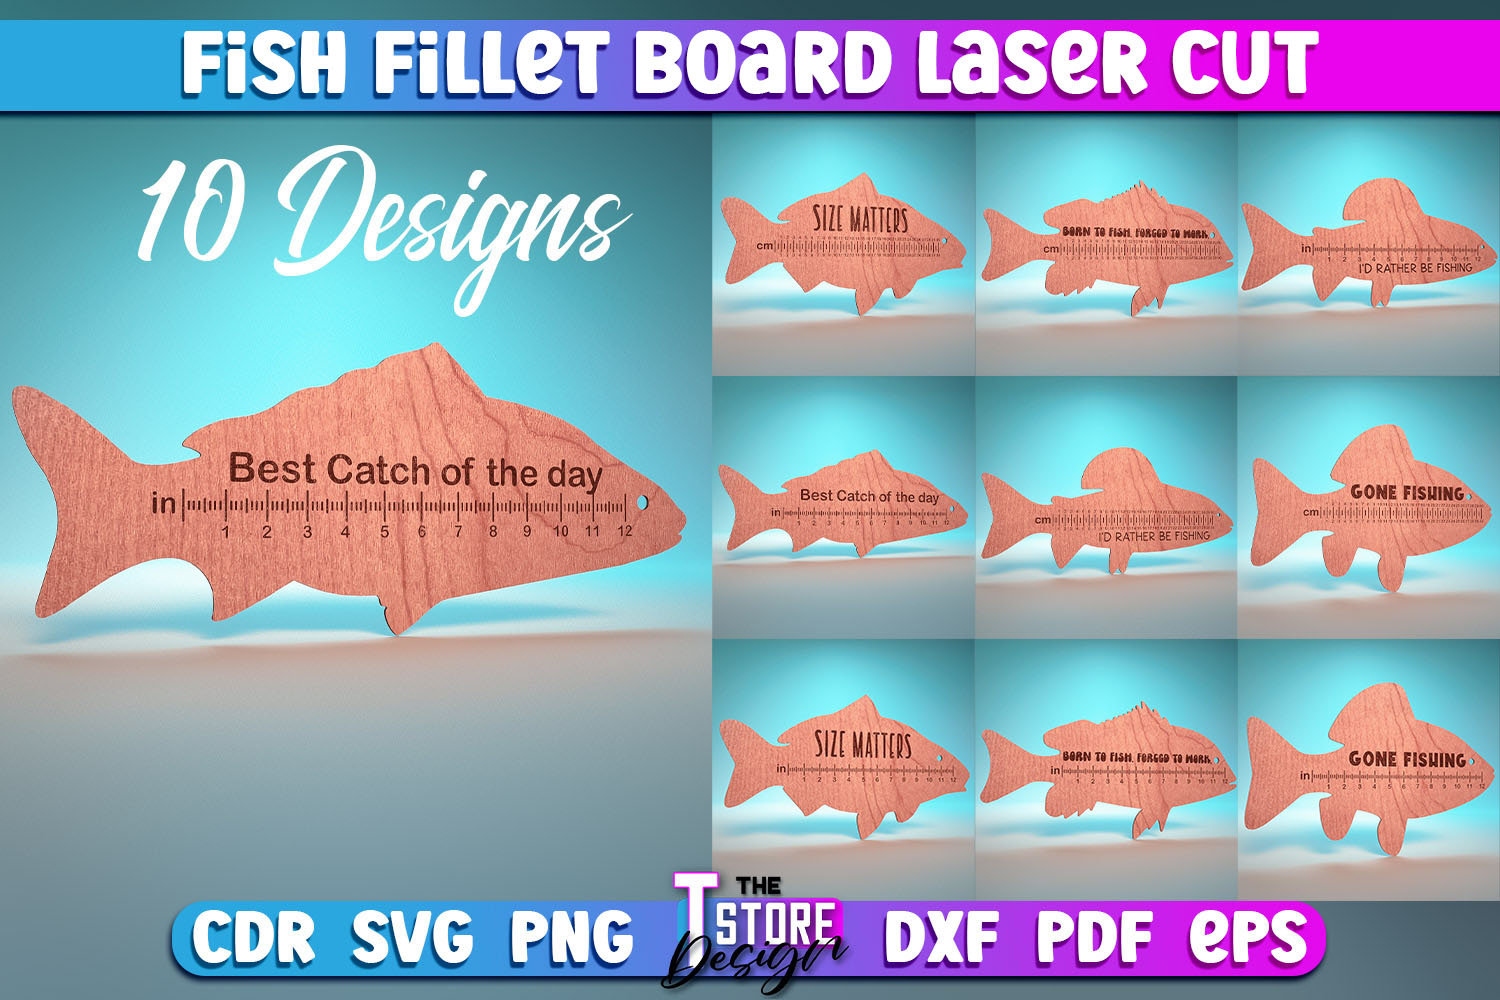 Fish Fillet Board -  Canada